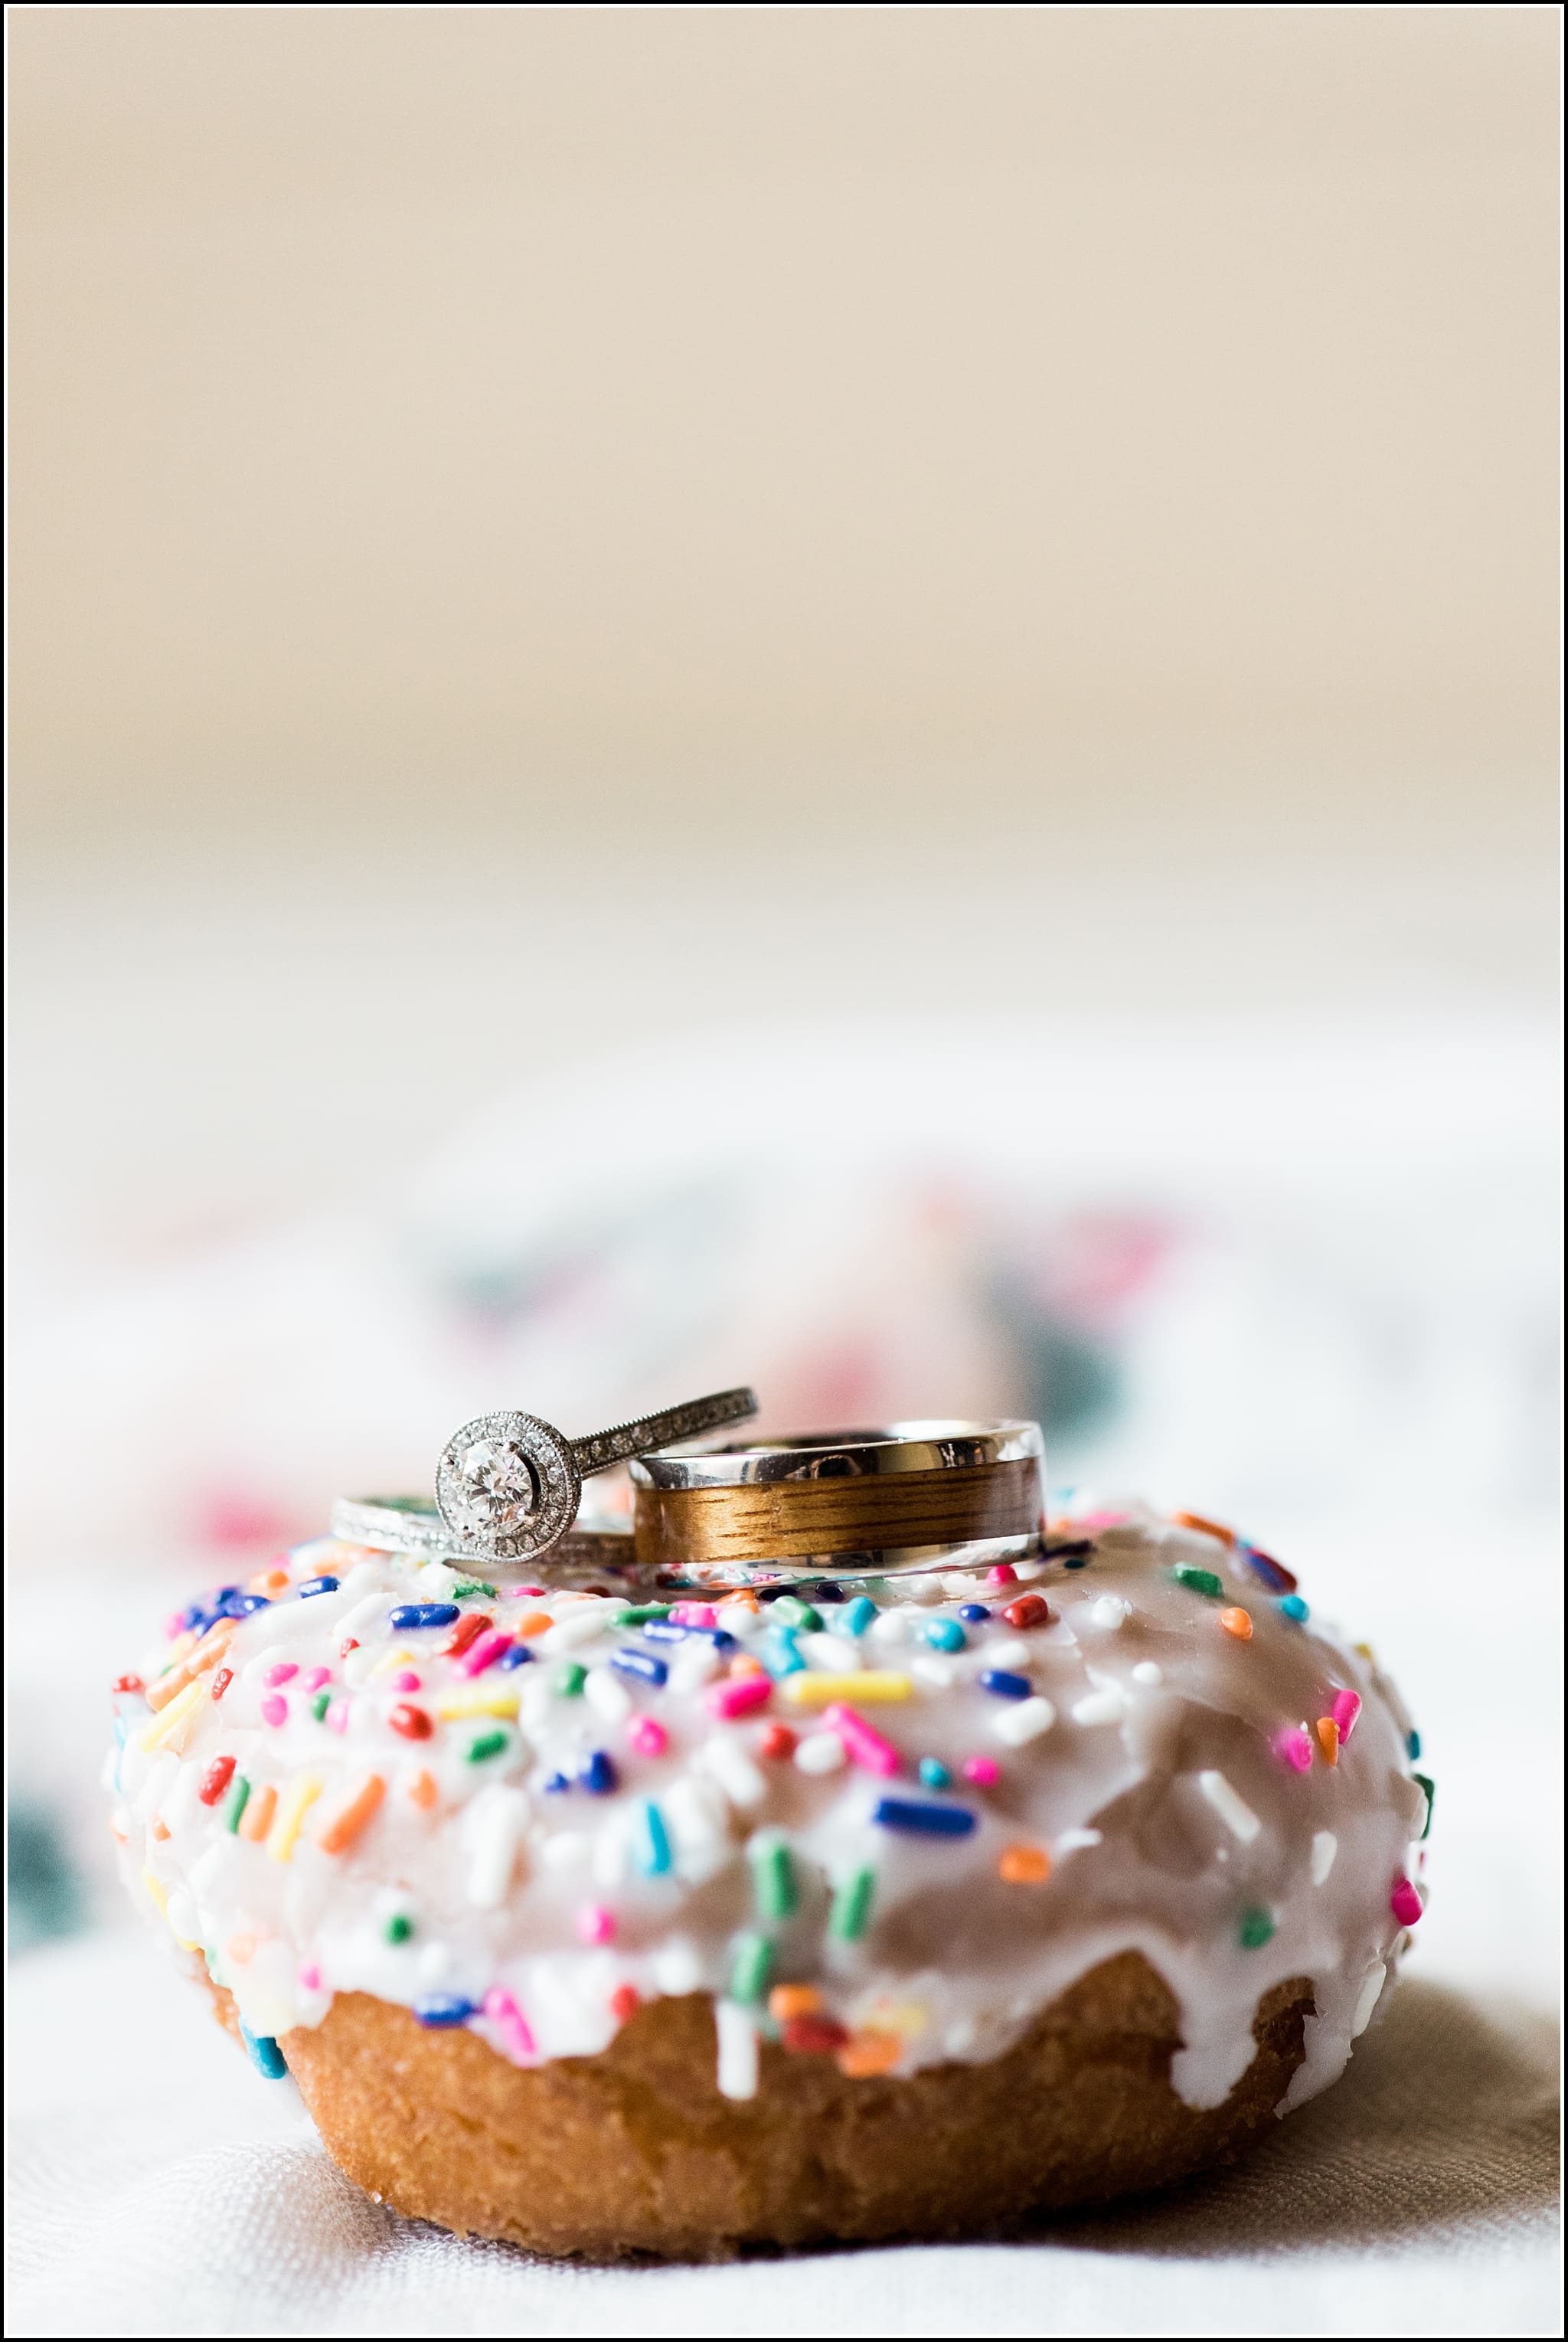  favorite wedding images 2016, wedding photos from 2016, our favorite wedding photos, donut and ring, sprinkled wedding donut